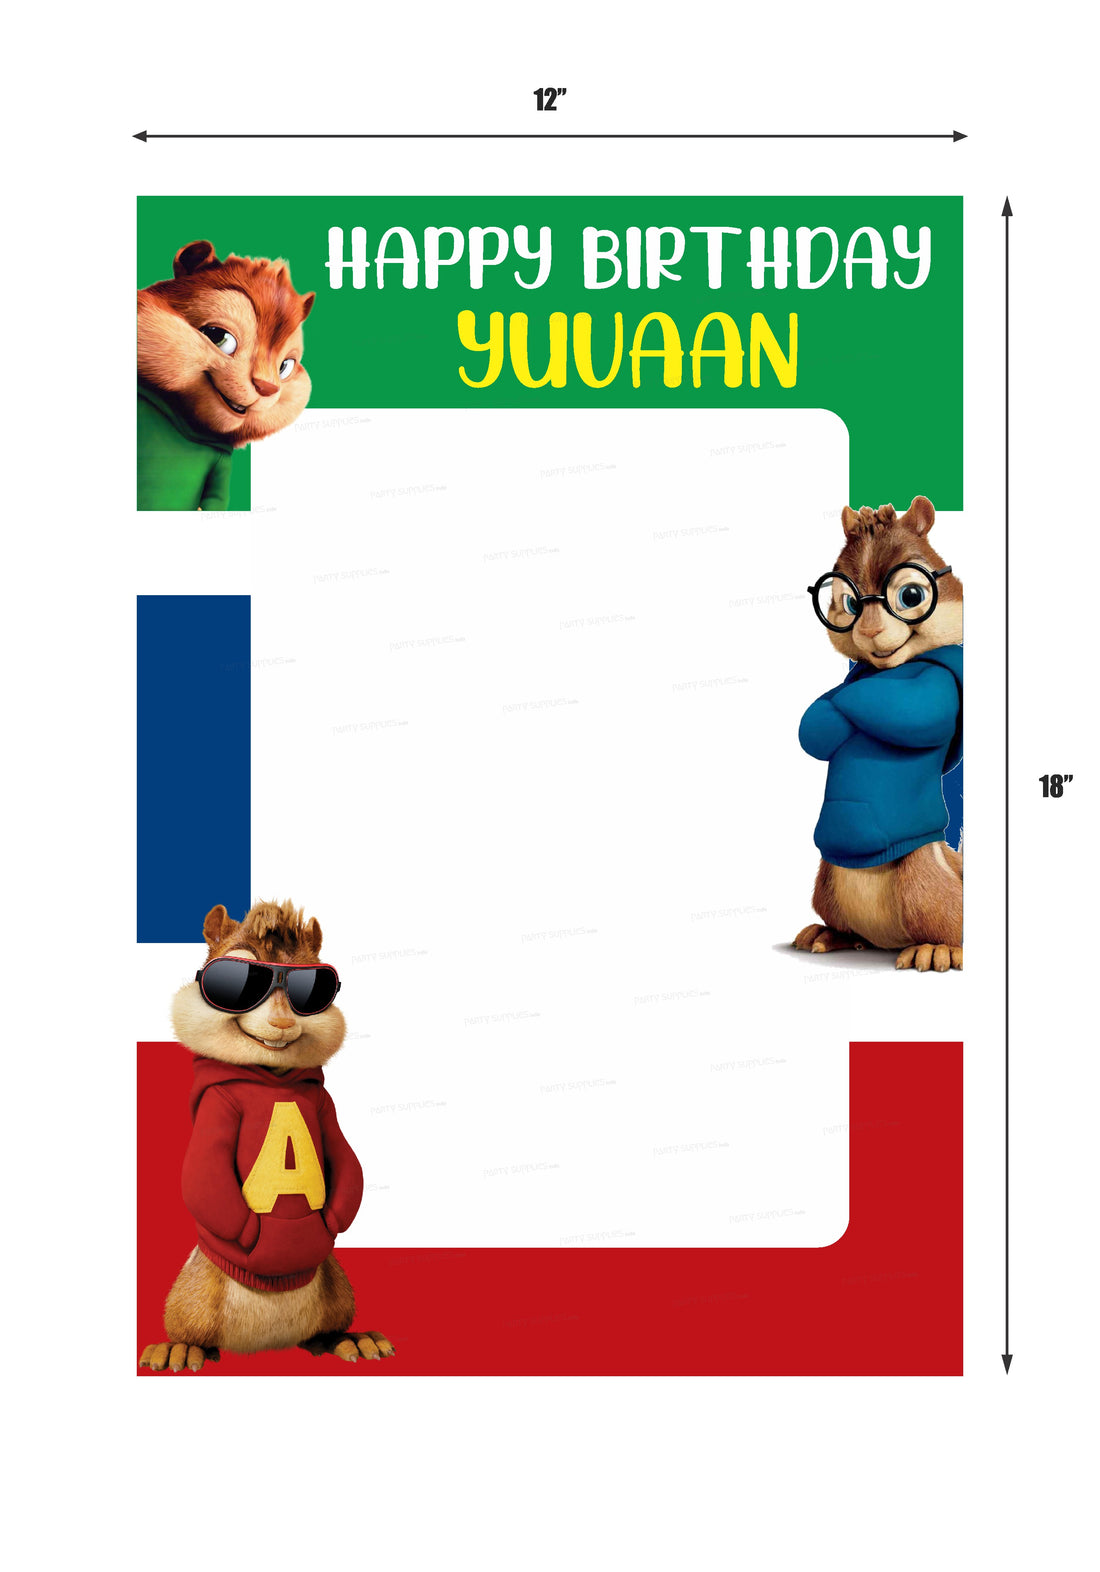 PSI Alvin and Chipmunks Theme Customized PhotoBooth